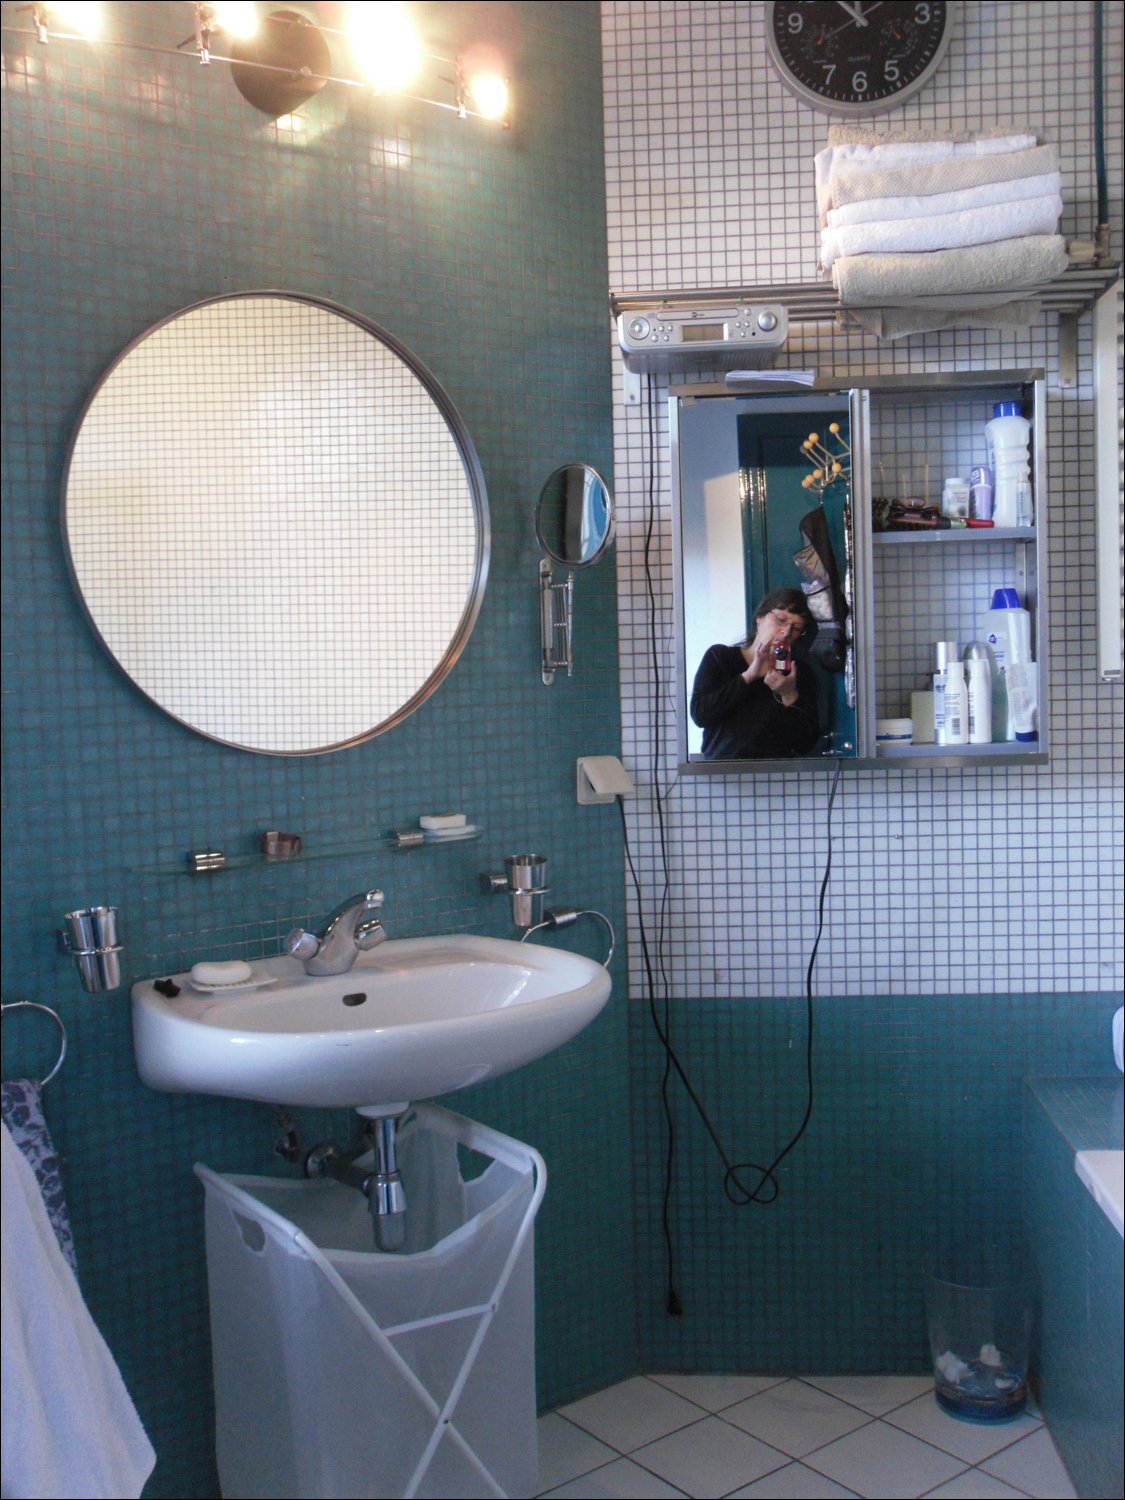 Second floor shower room in Delft house